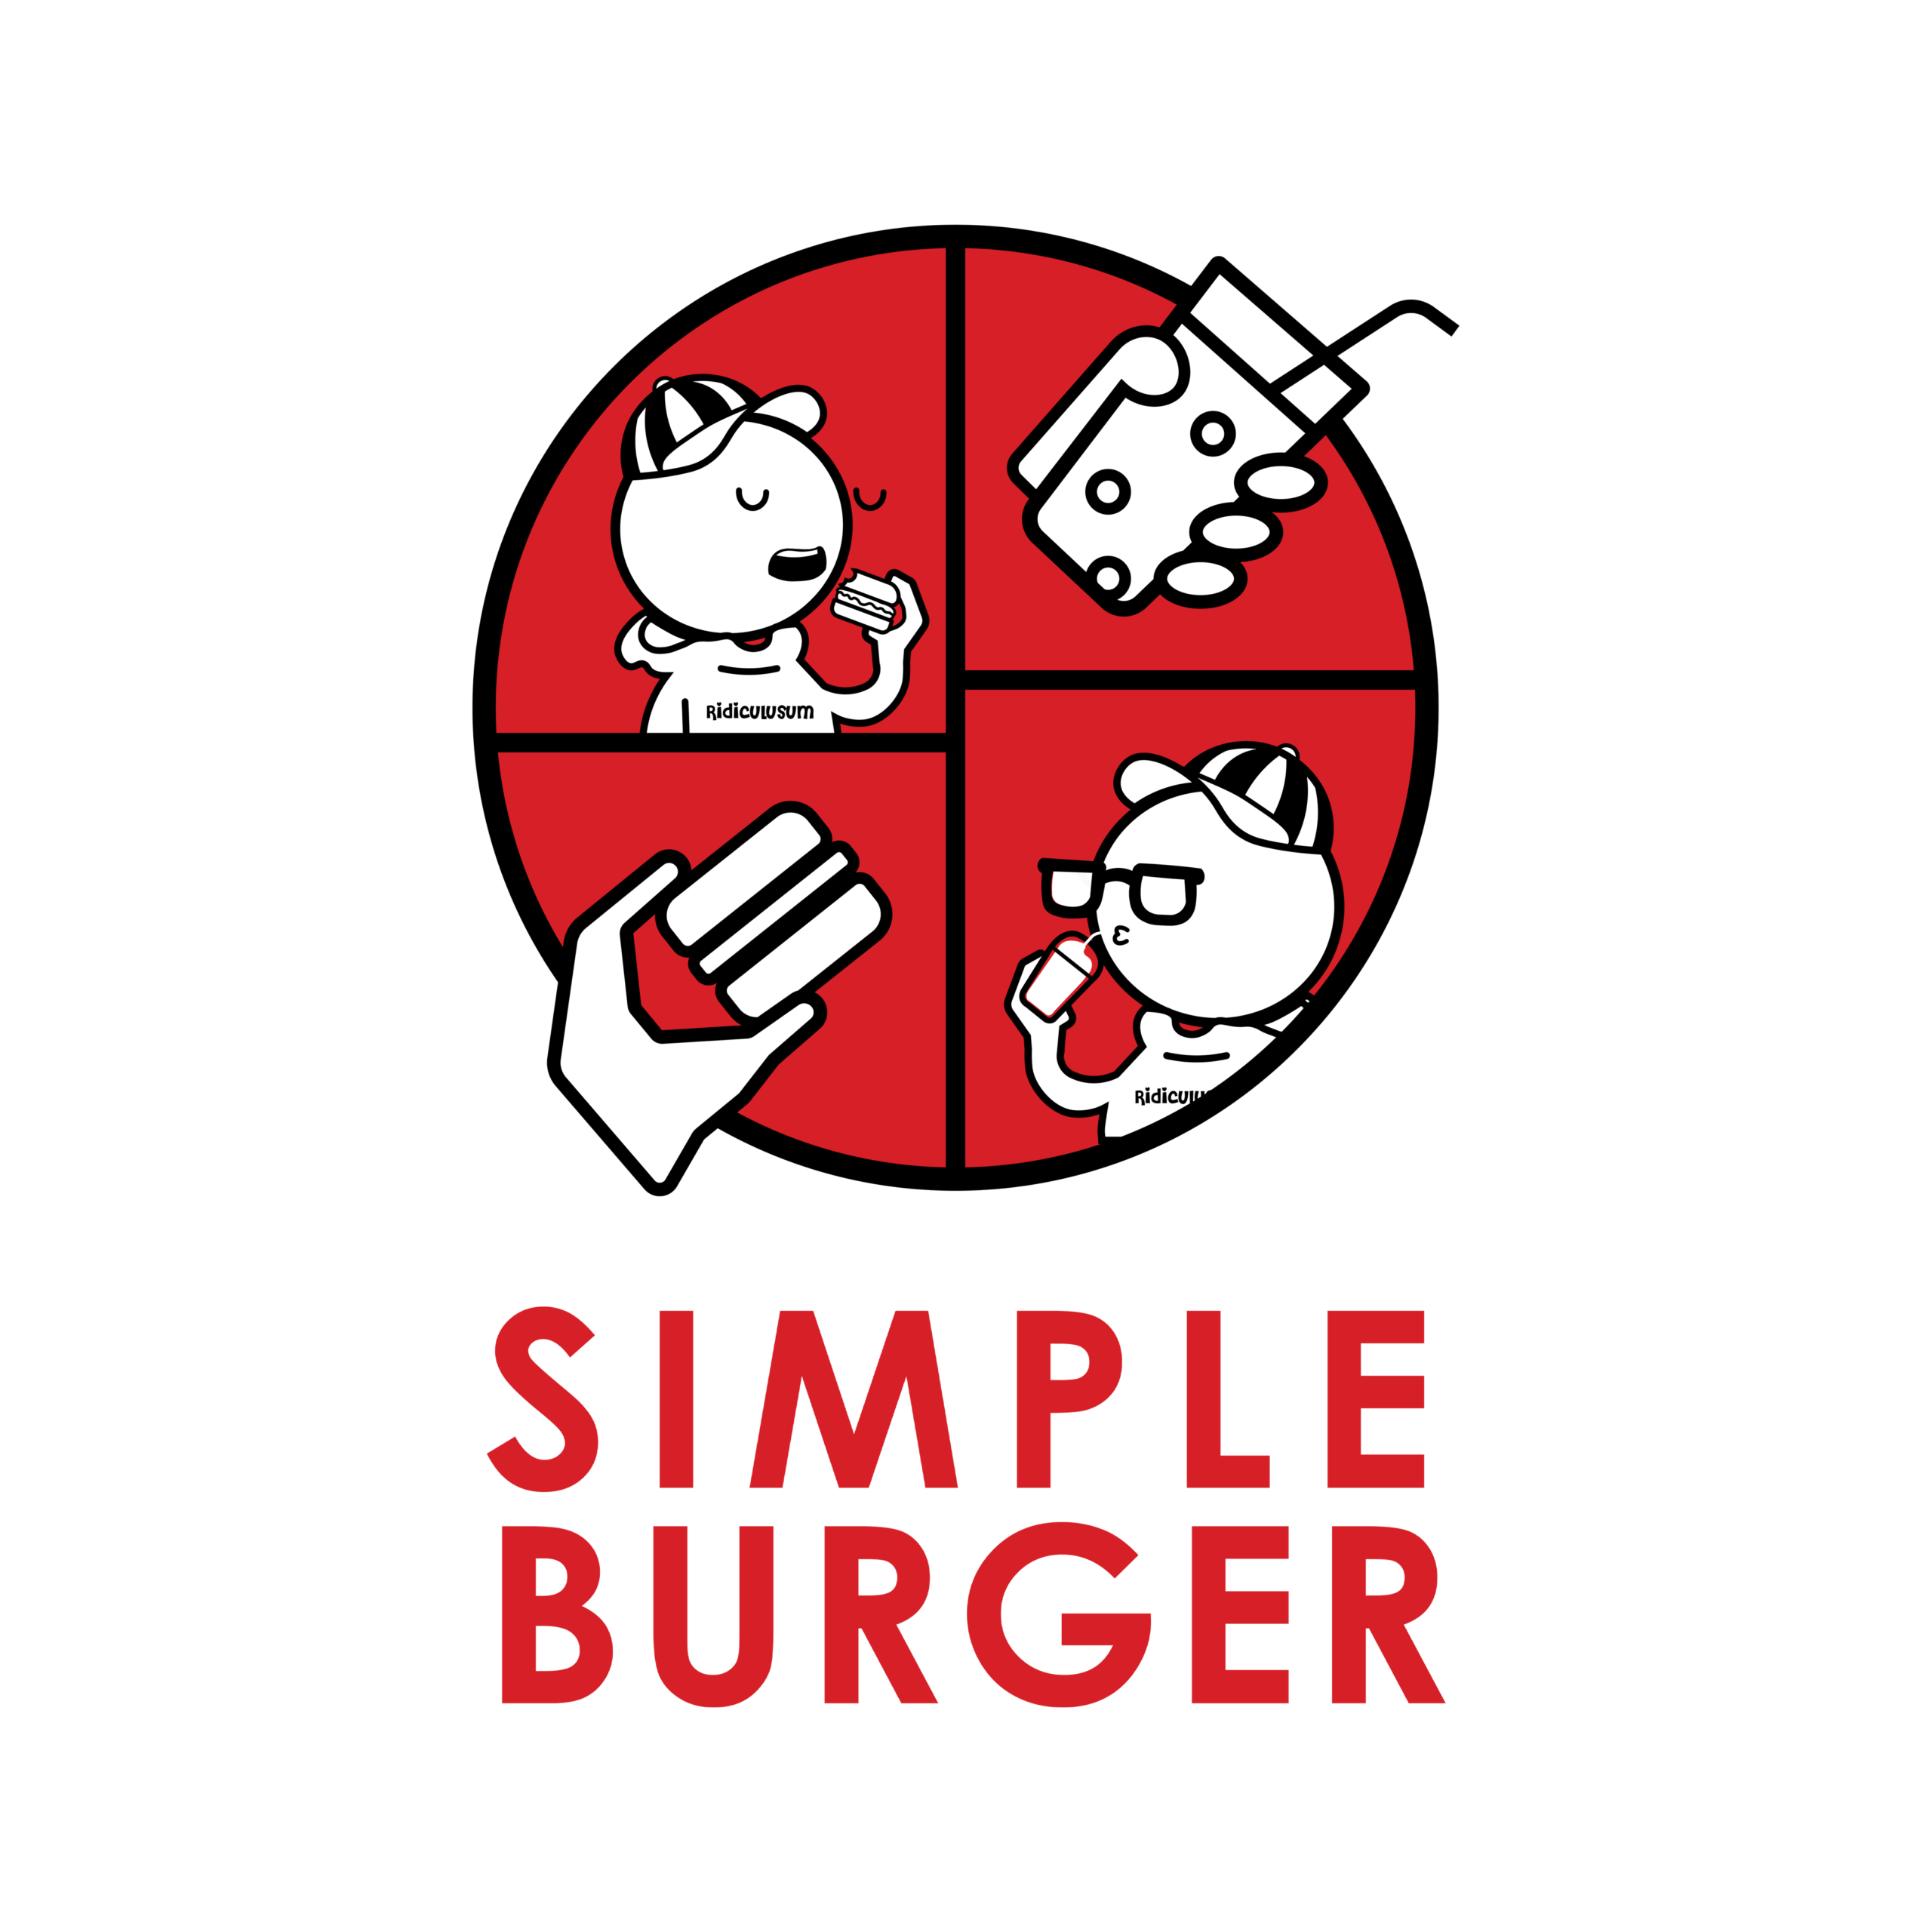 Simple burger